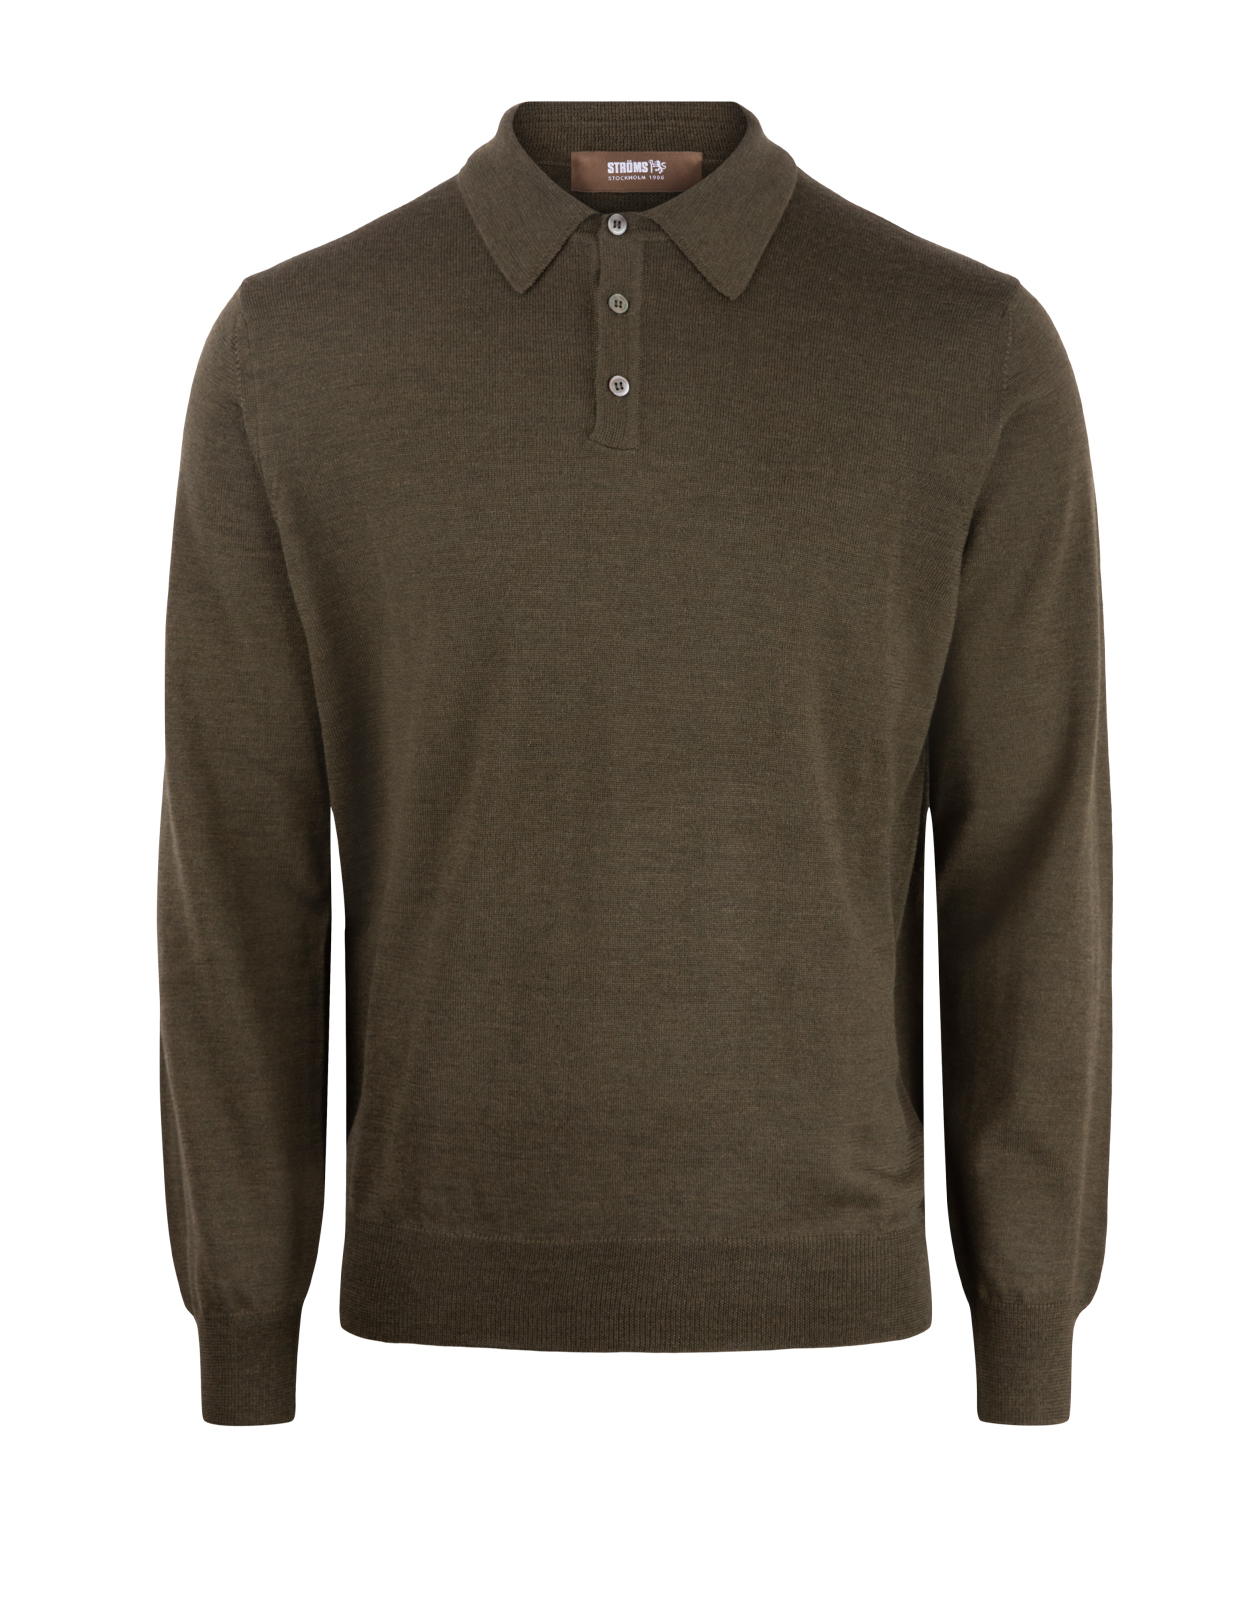 Poloshirt Sweater Merino Olive Green Stl XXXL